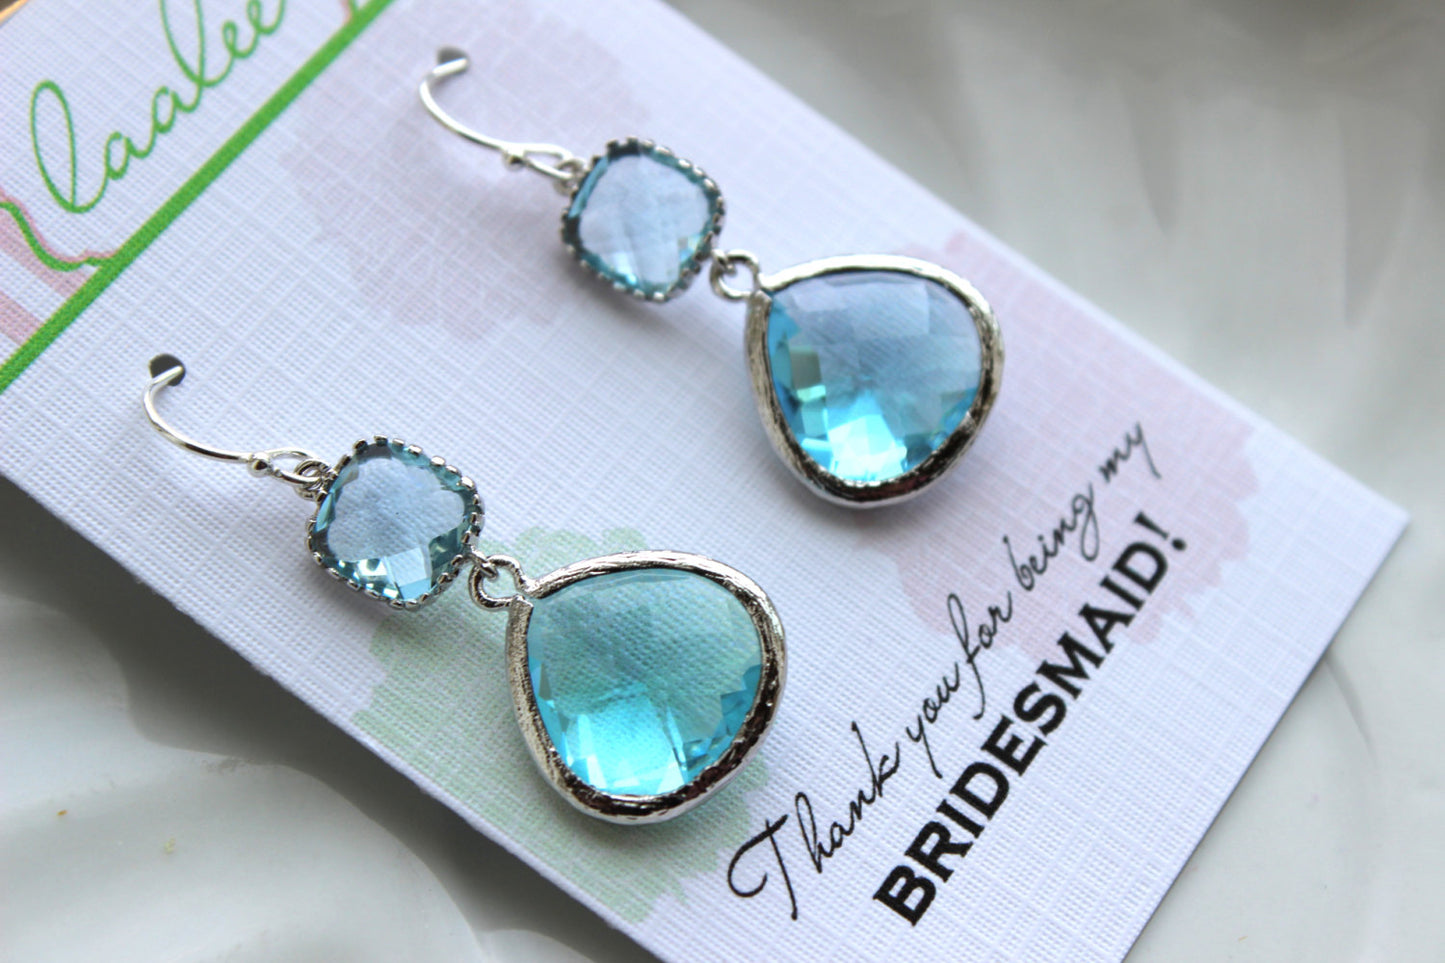 Silver Aquamarine Earrings Two Tiered - Aqua Blue Wedding Jewelry - Topaz Bridesmaid Earrings Gift Aquamarine Bridal Jewelry - Gift Under 35